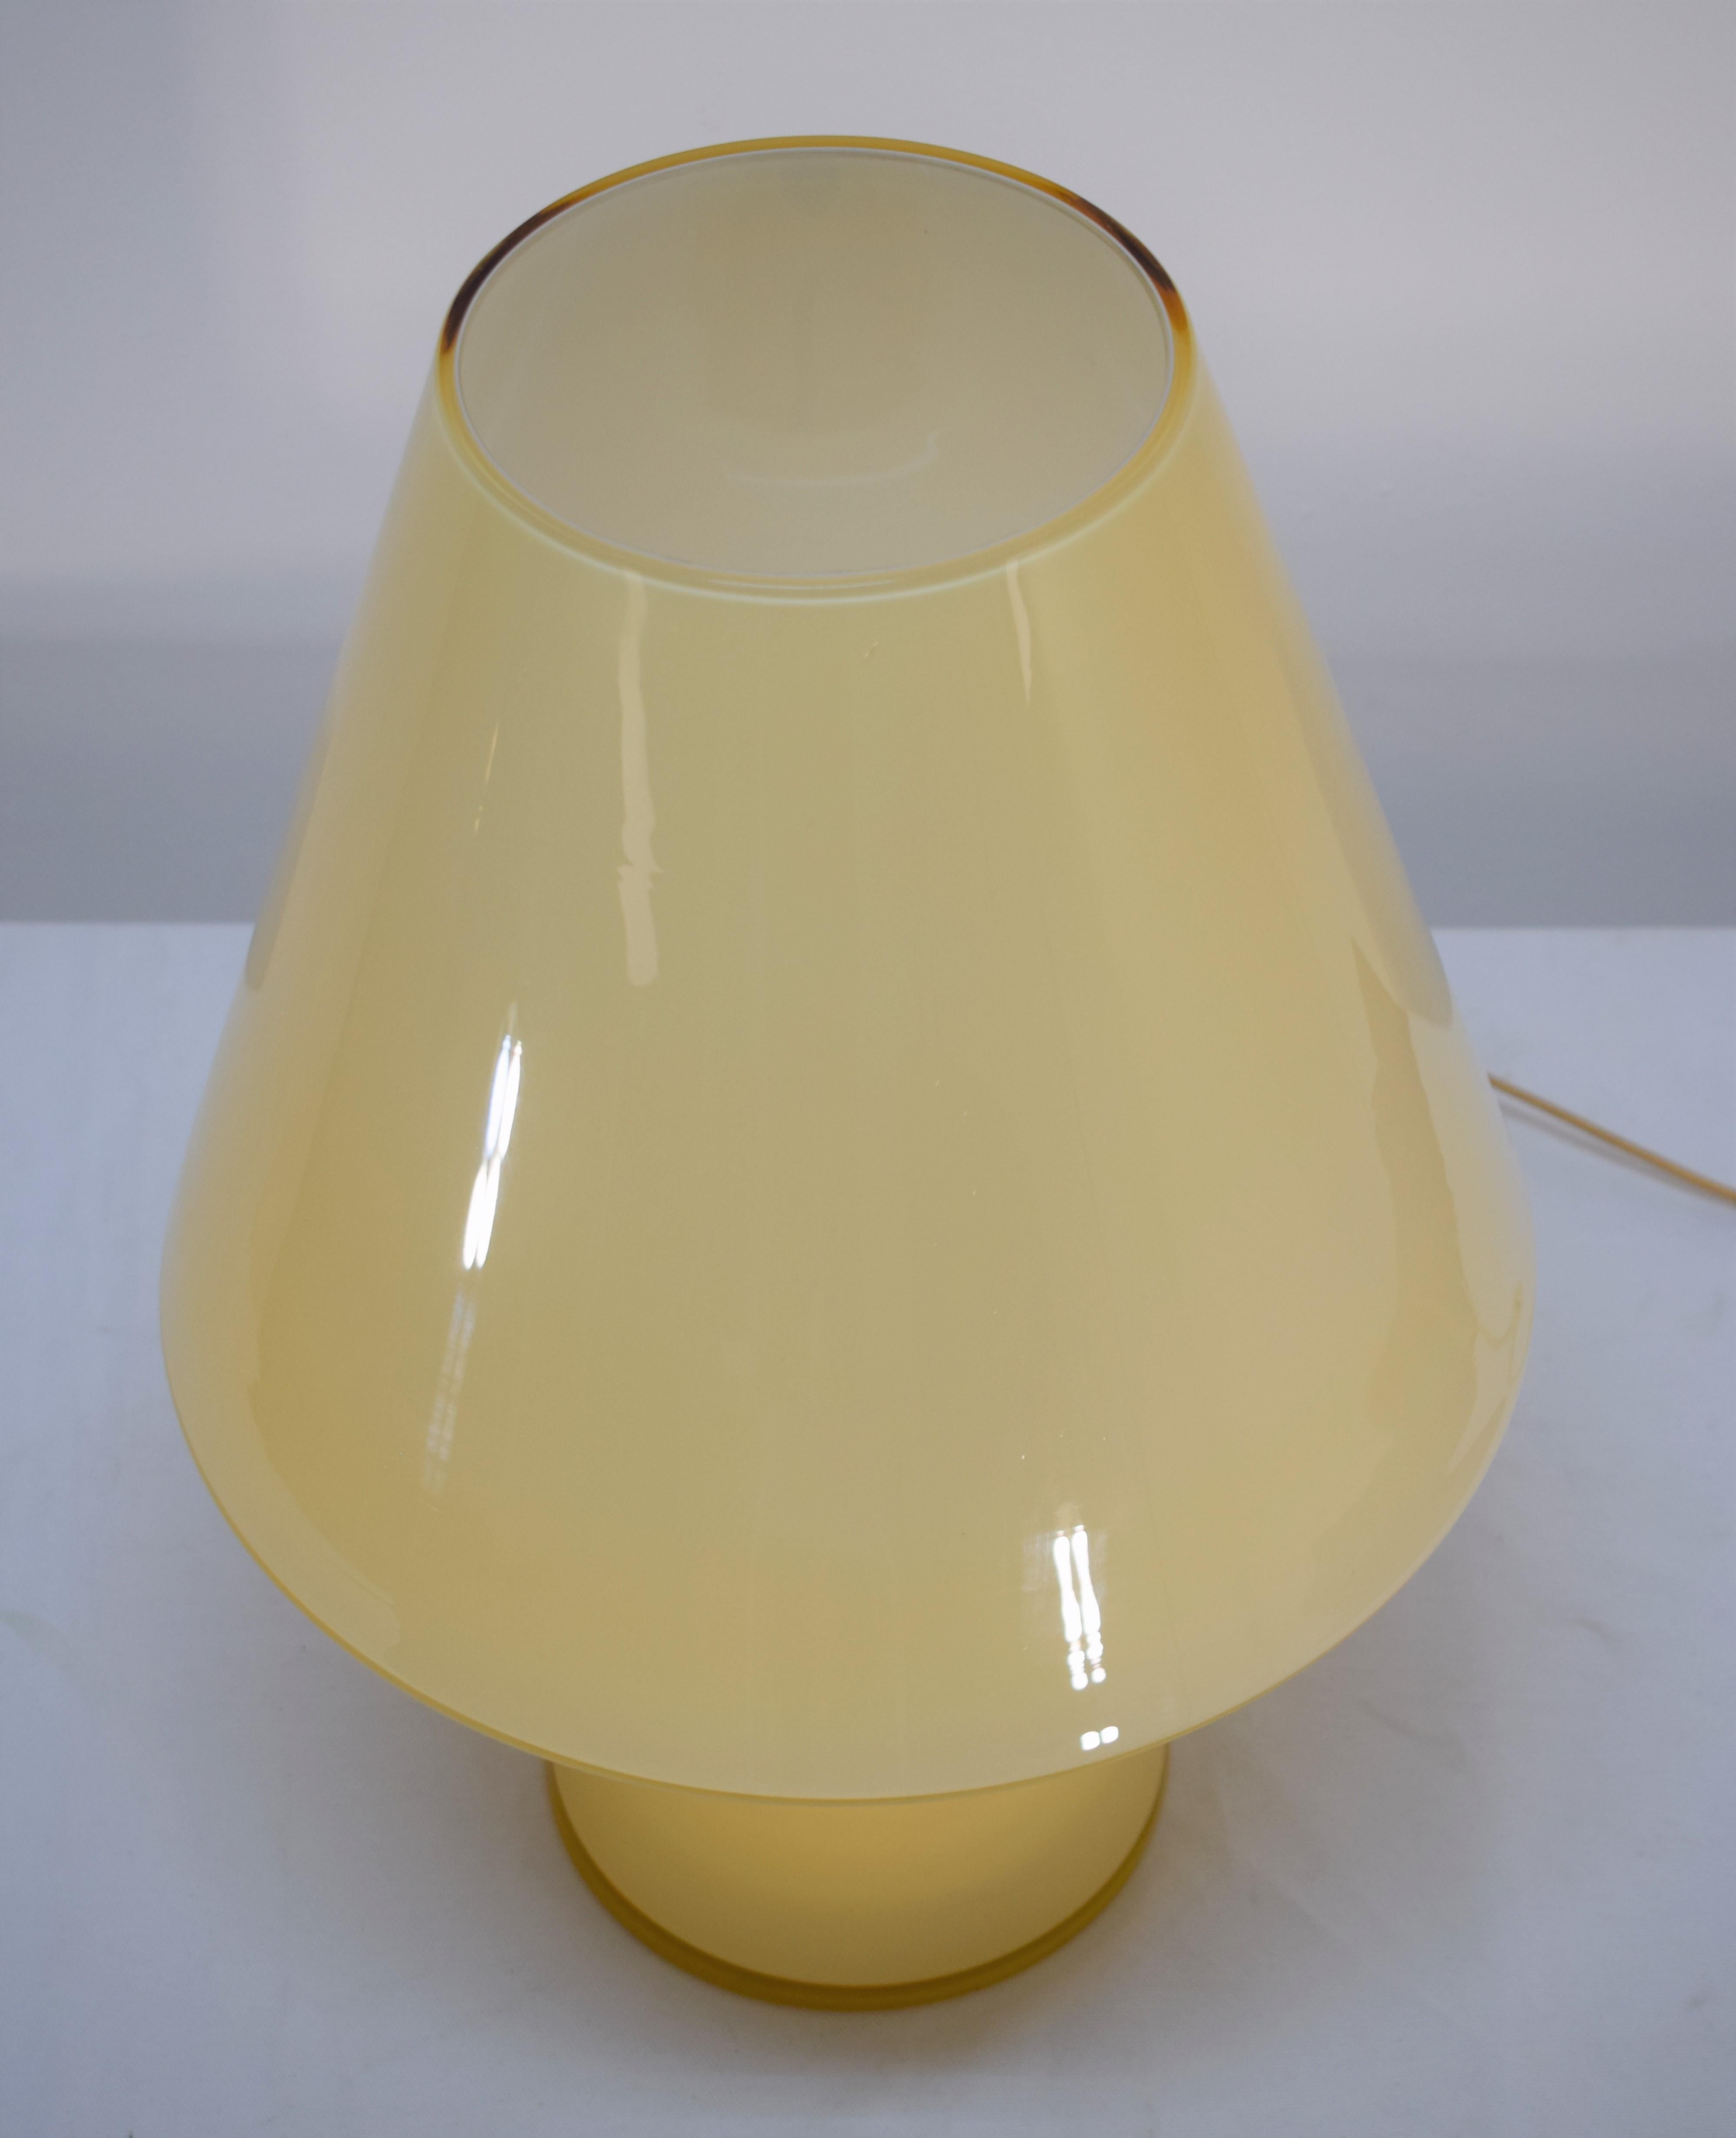 Italian table lamp by Vistosi, Murano, 1960s.

Dimensions: H= 50 cm; D= 36 cm.